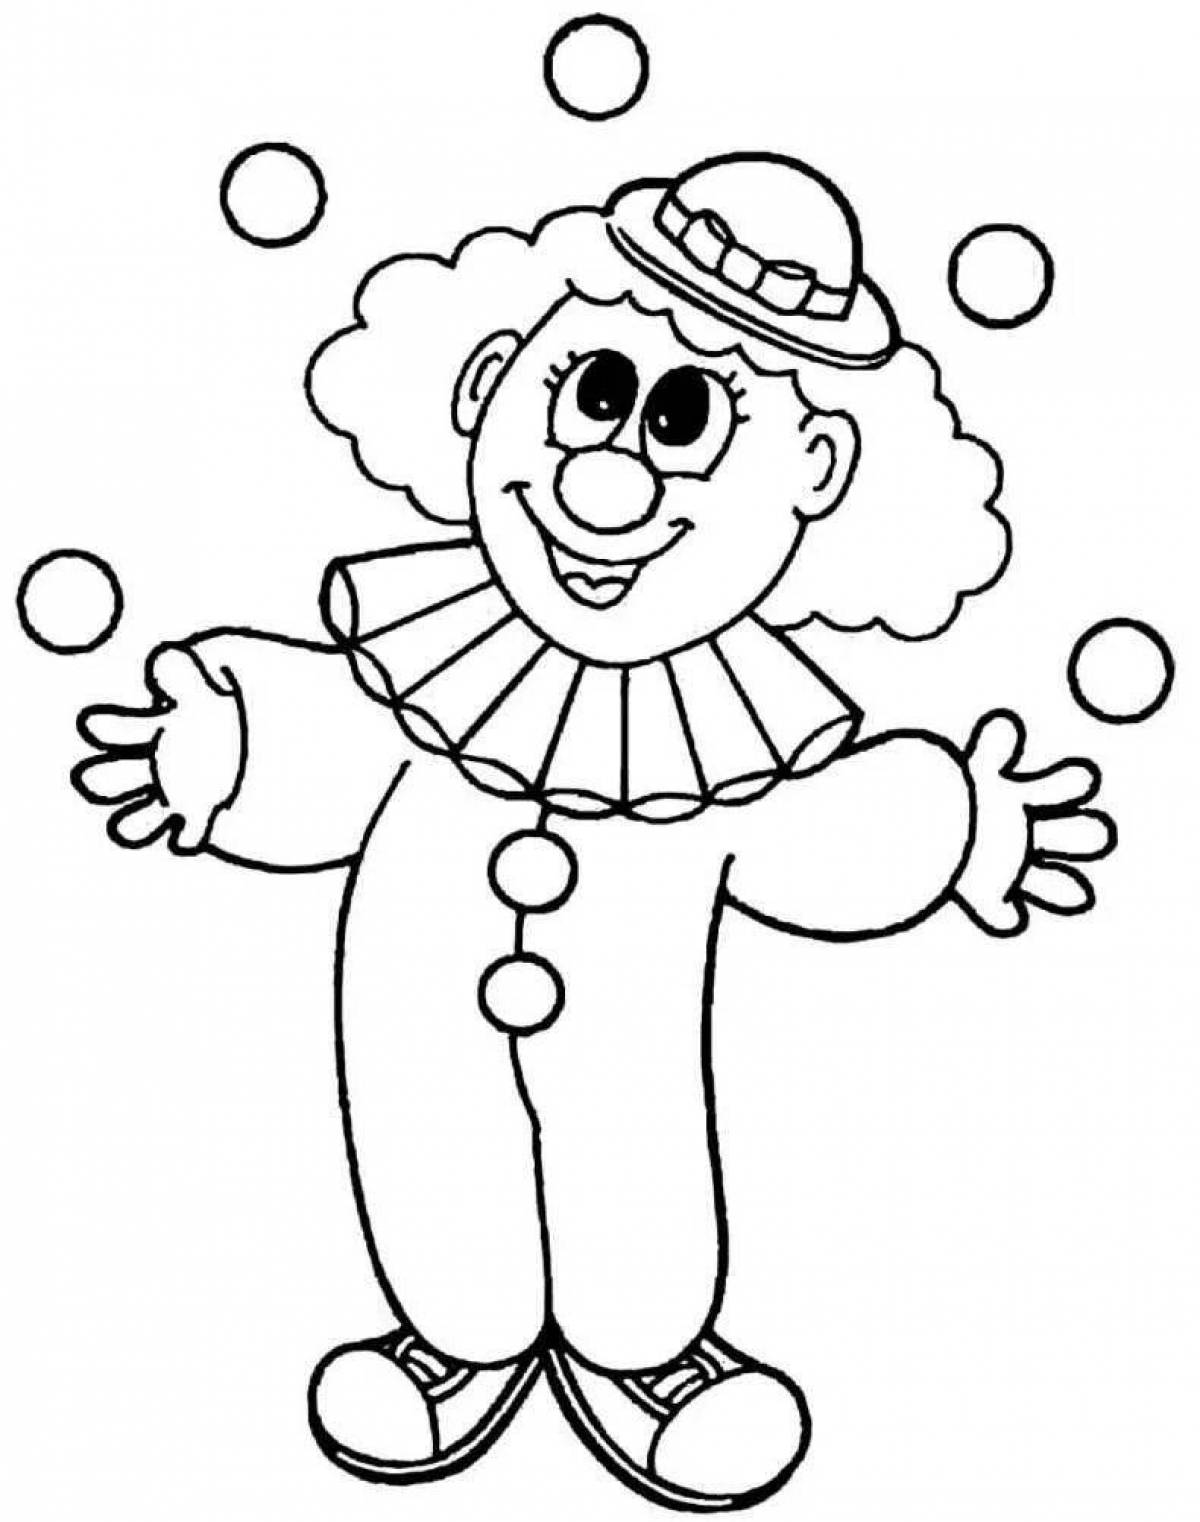 Live clown coloring book for preschoolers